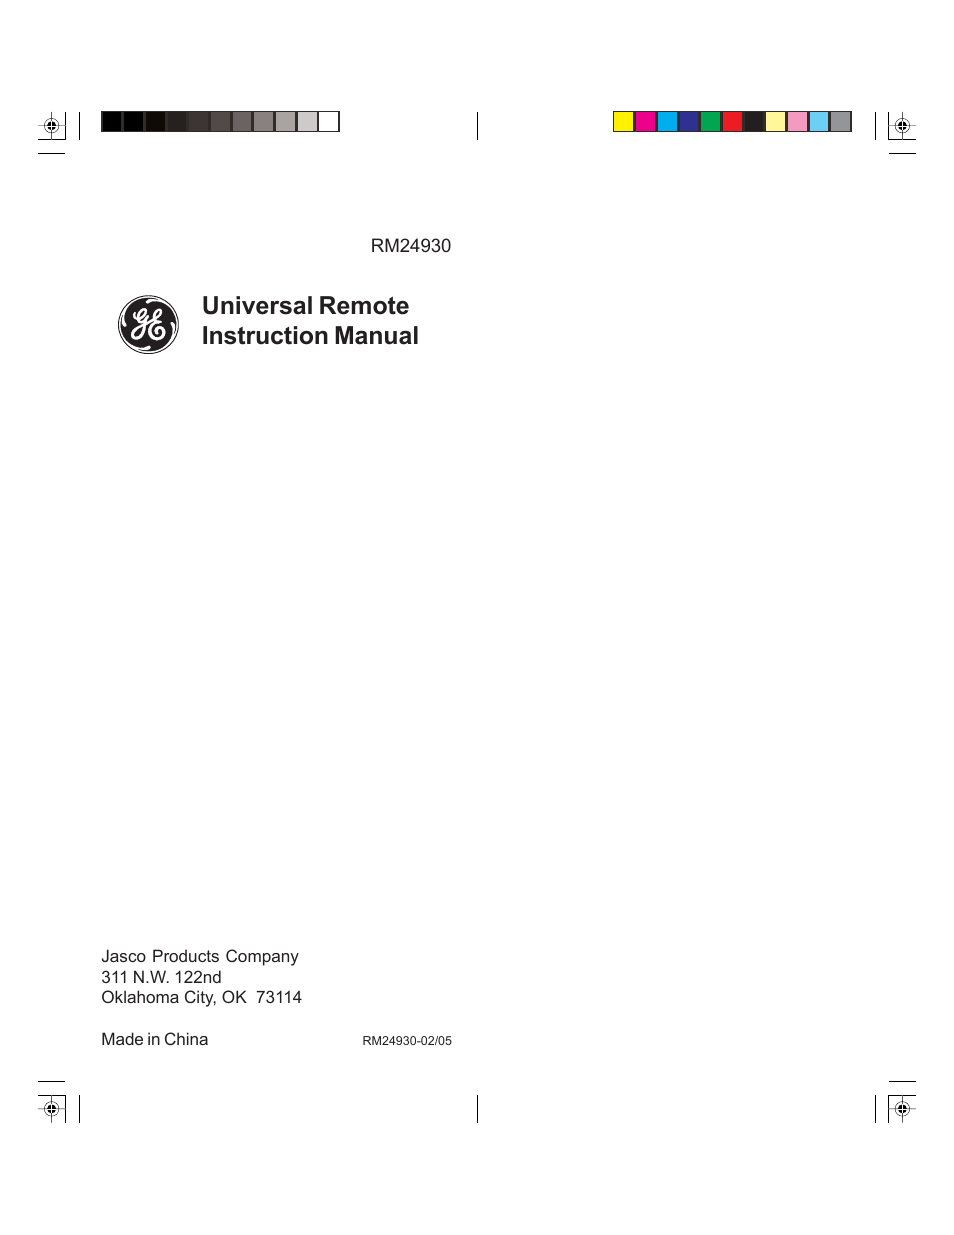 Universal remote instruction manual | GE 24930 GE Universal Remote User Manual | Page 9 / 9